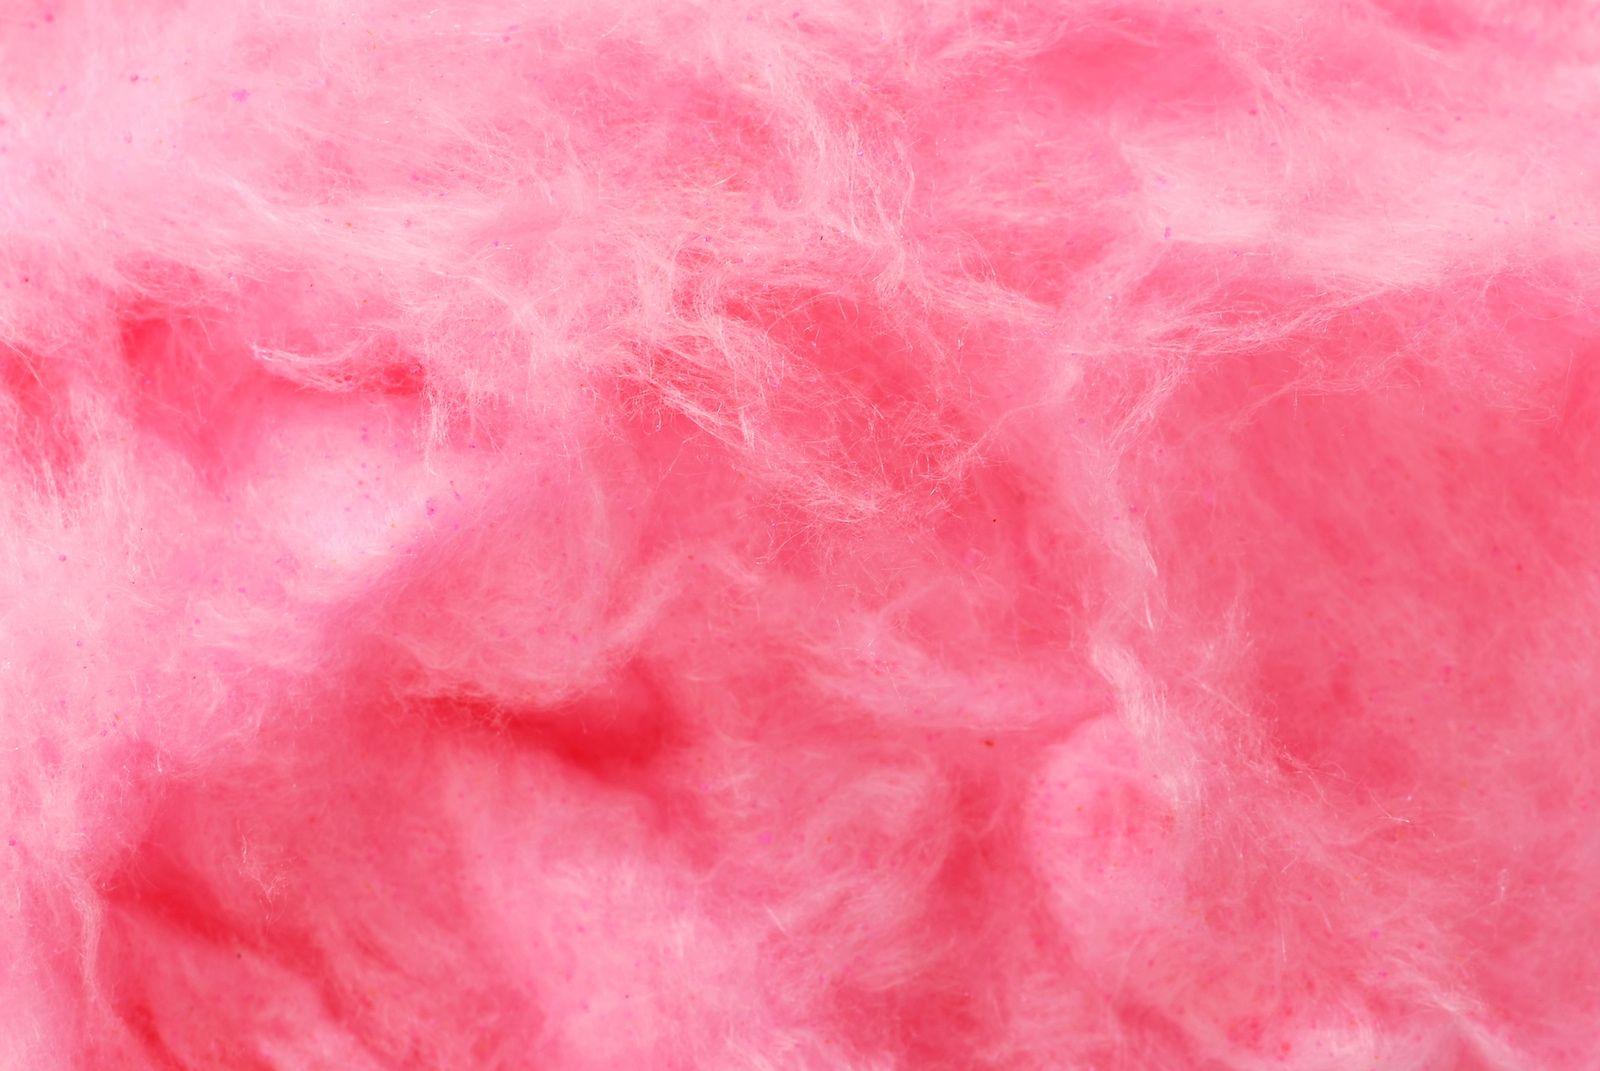 Cotton Candy WallpaperUSkY.com